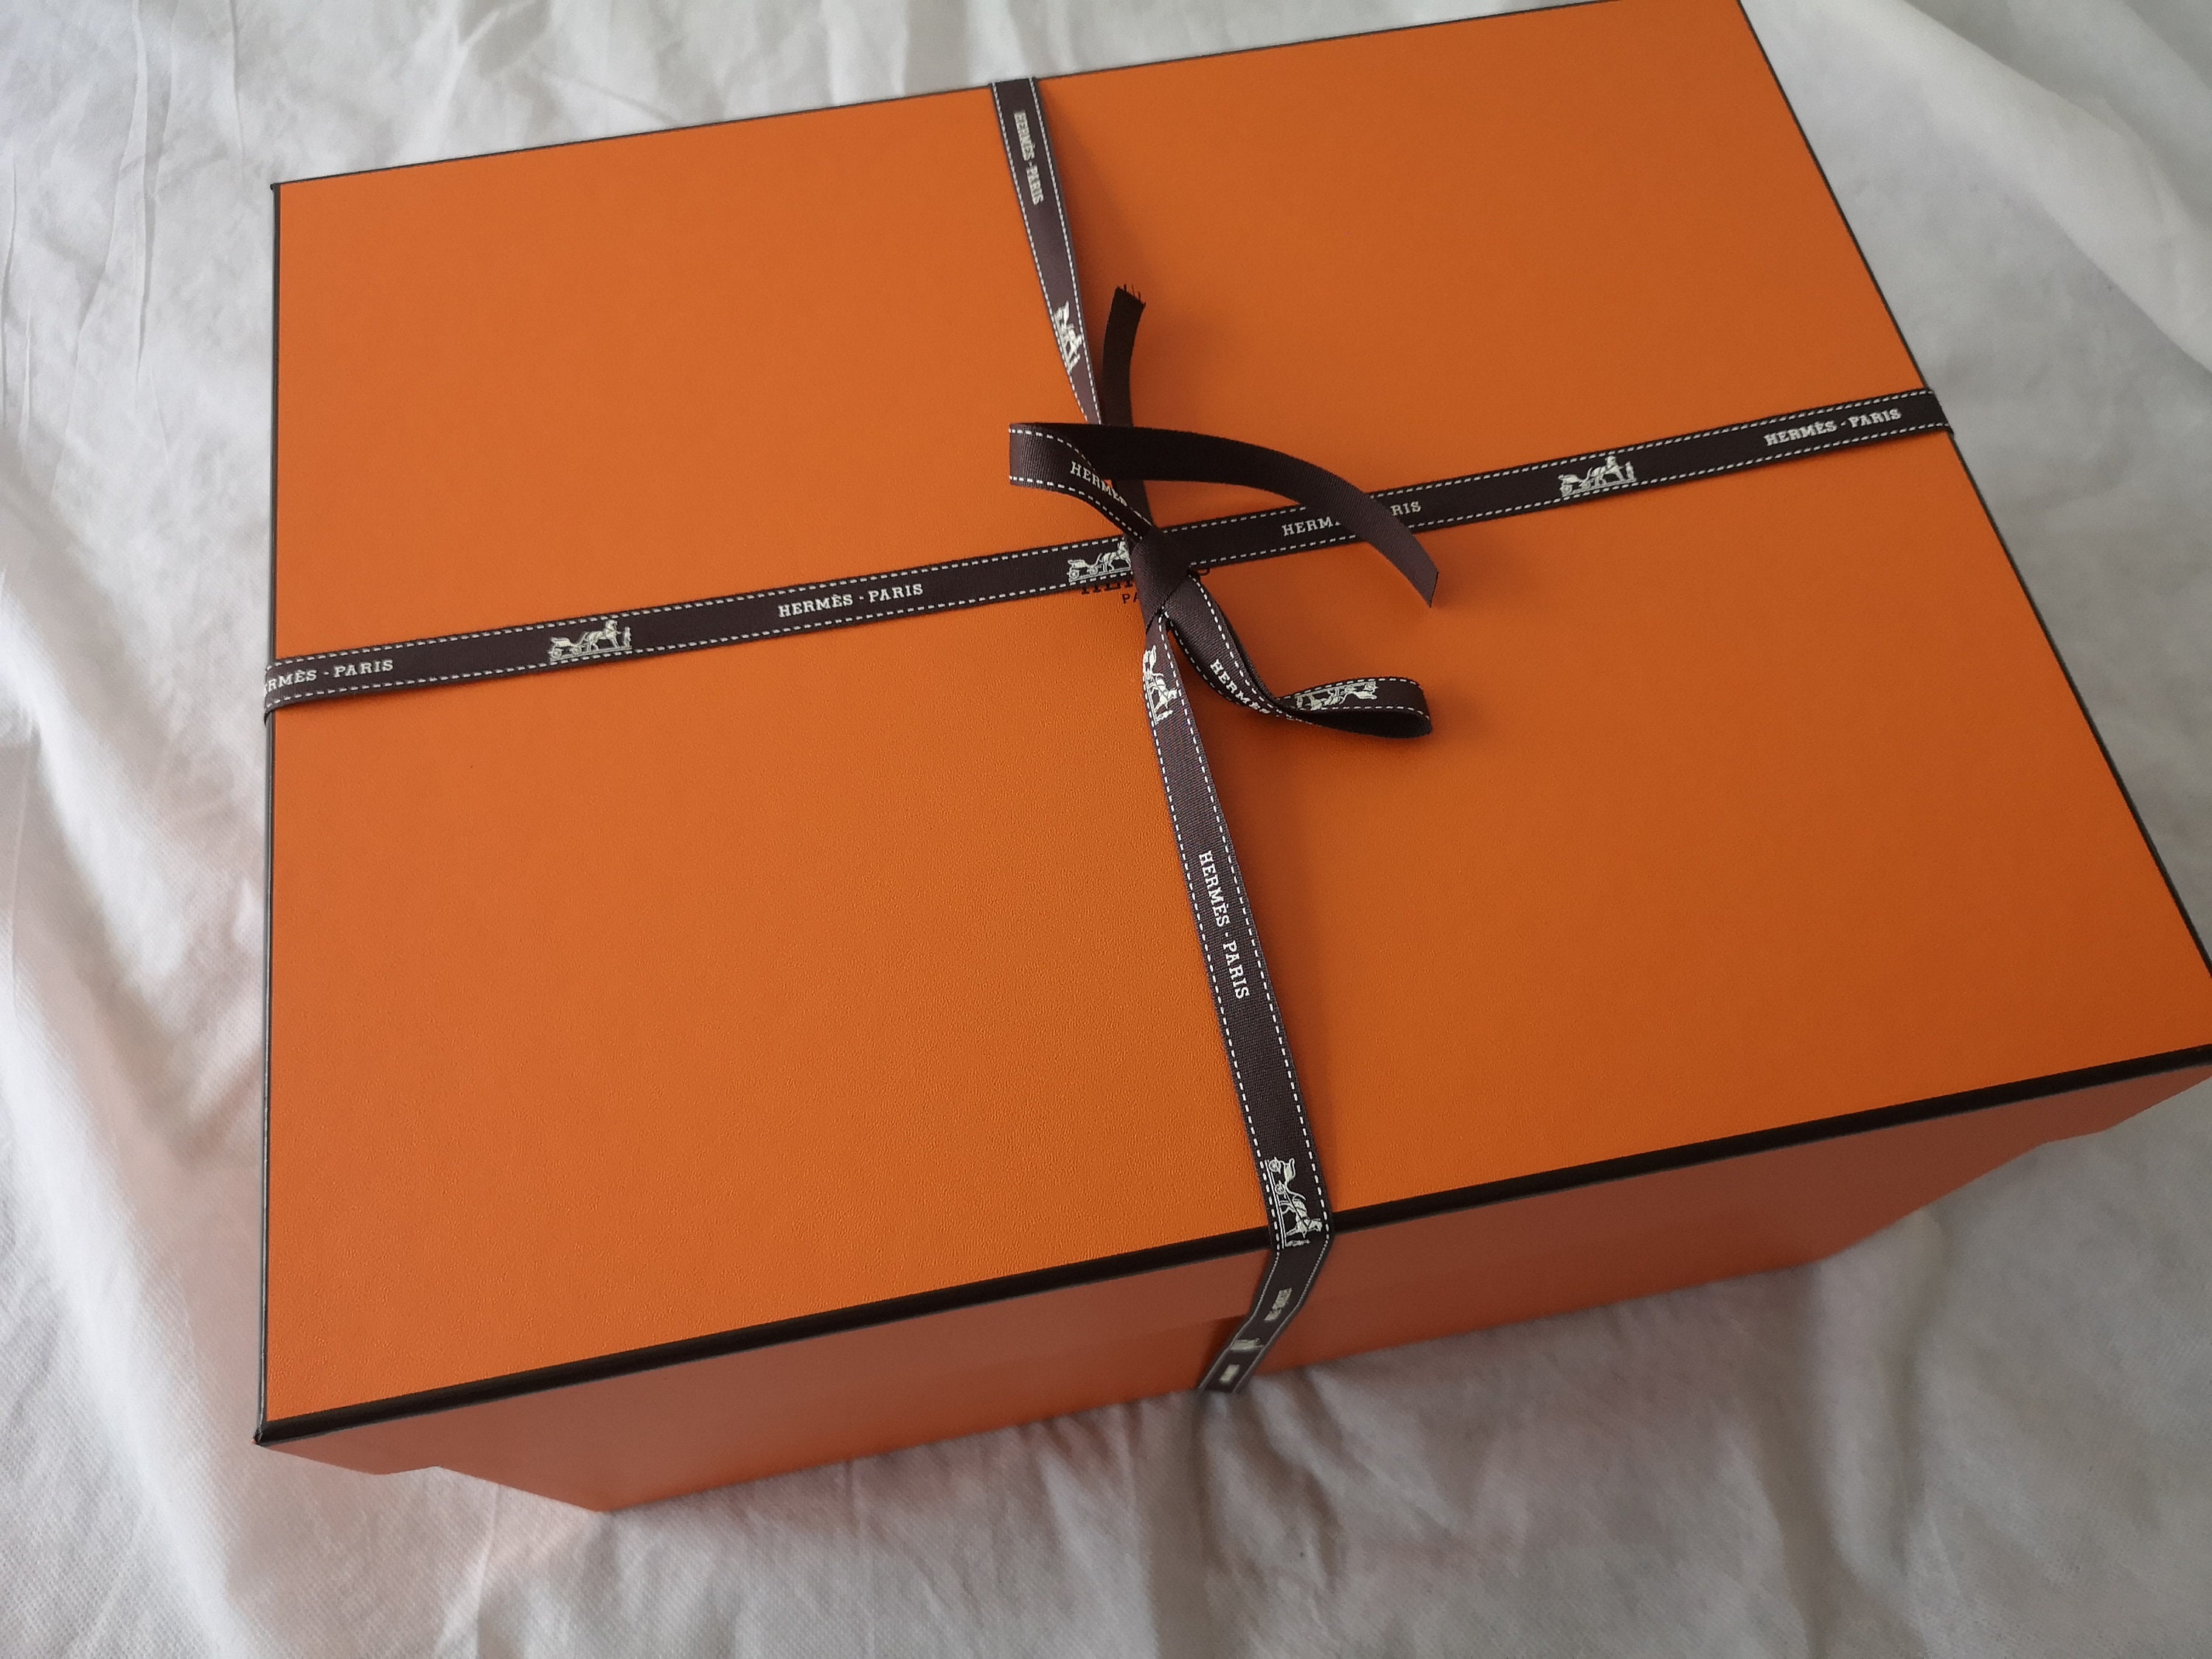 Hermes Paris Gift Box with paper bag ribbon 33W x 22H x 4 D